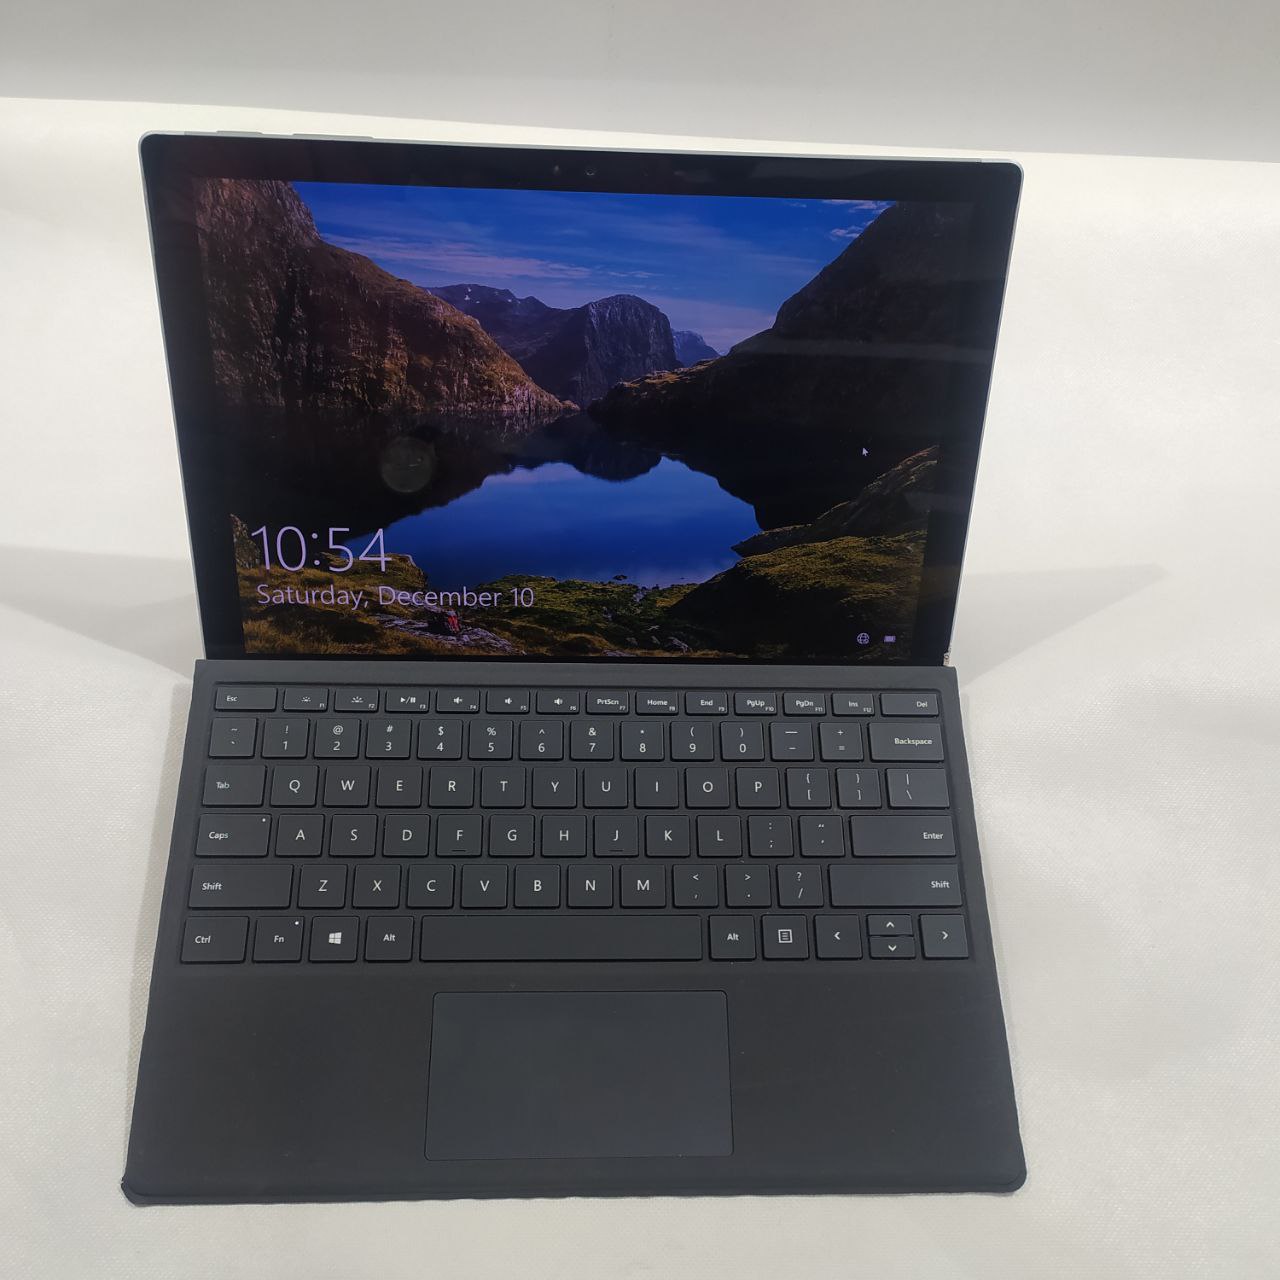 قیمت لپ تاپ استوک Microsoft Surface Pro 4